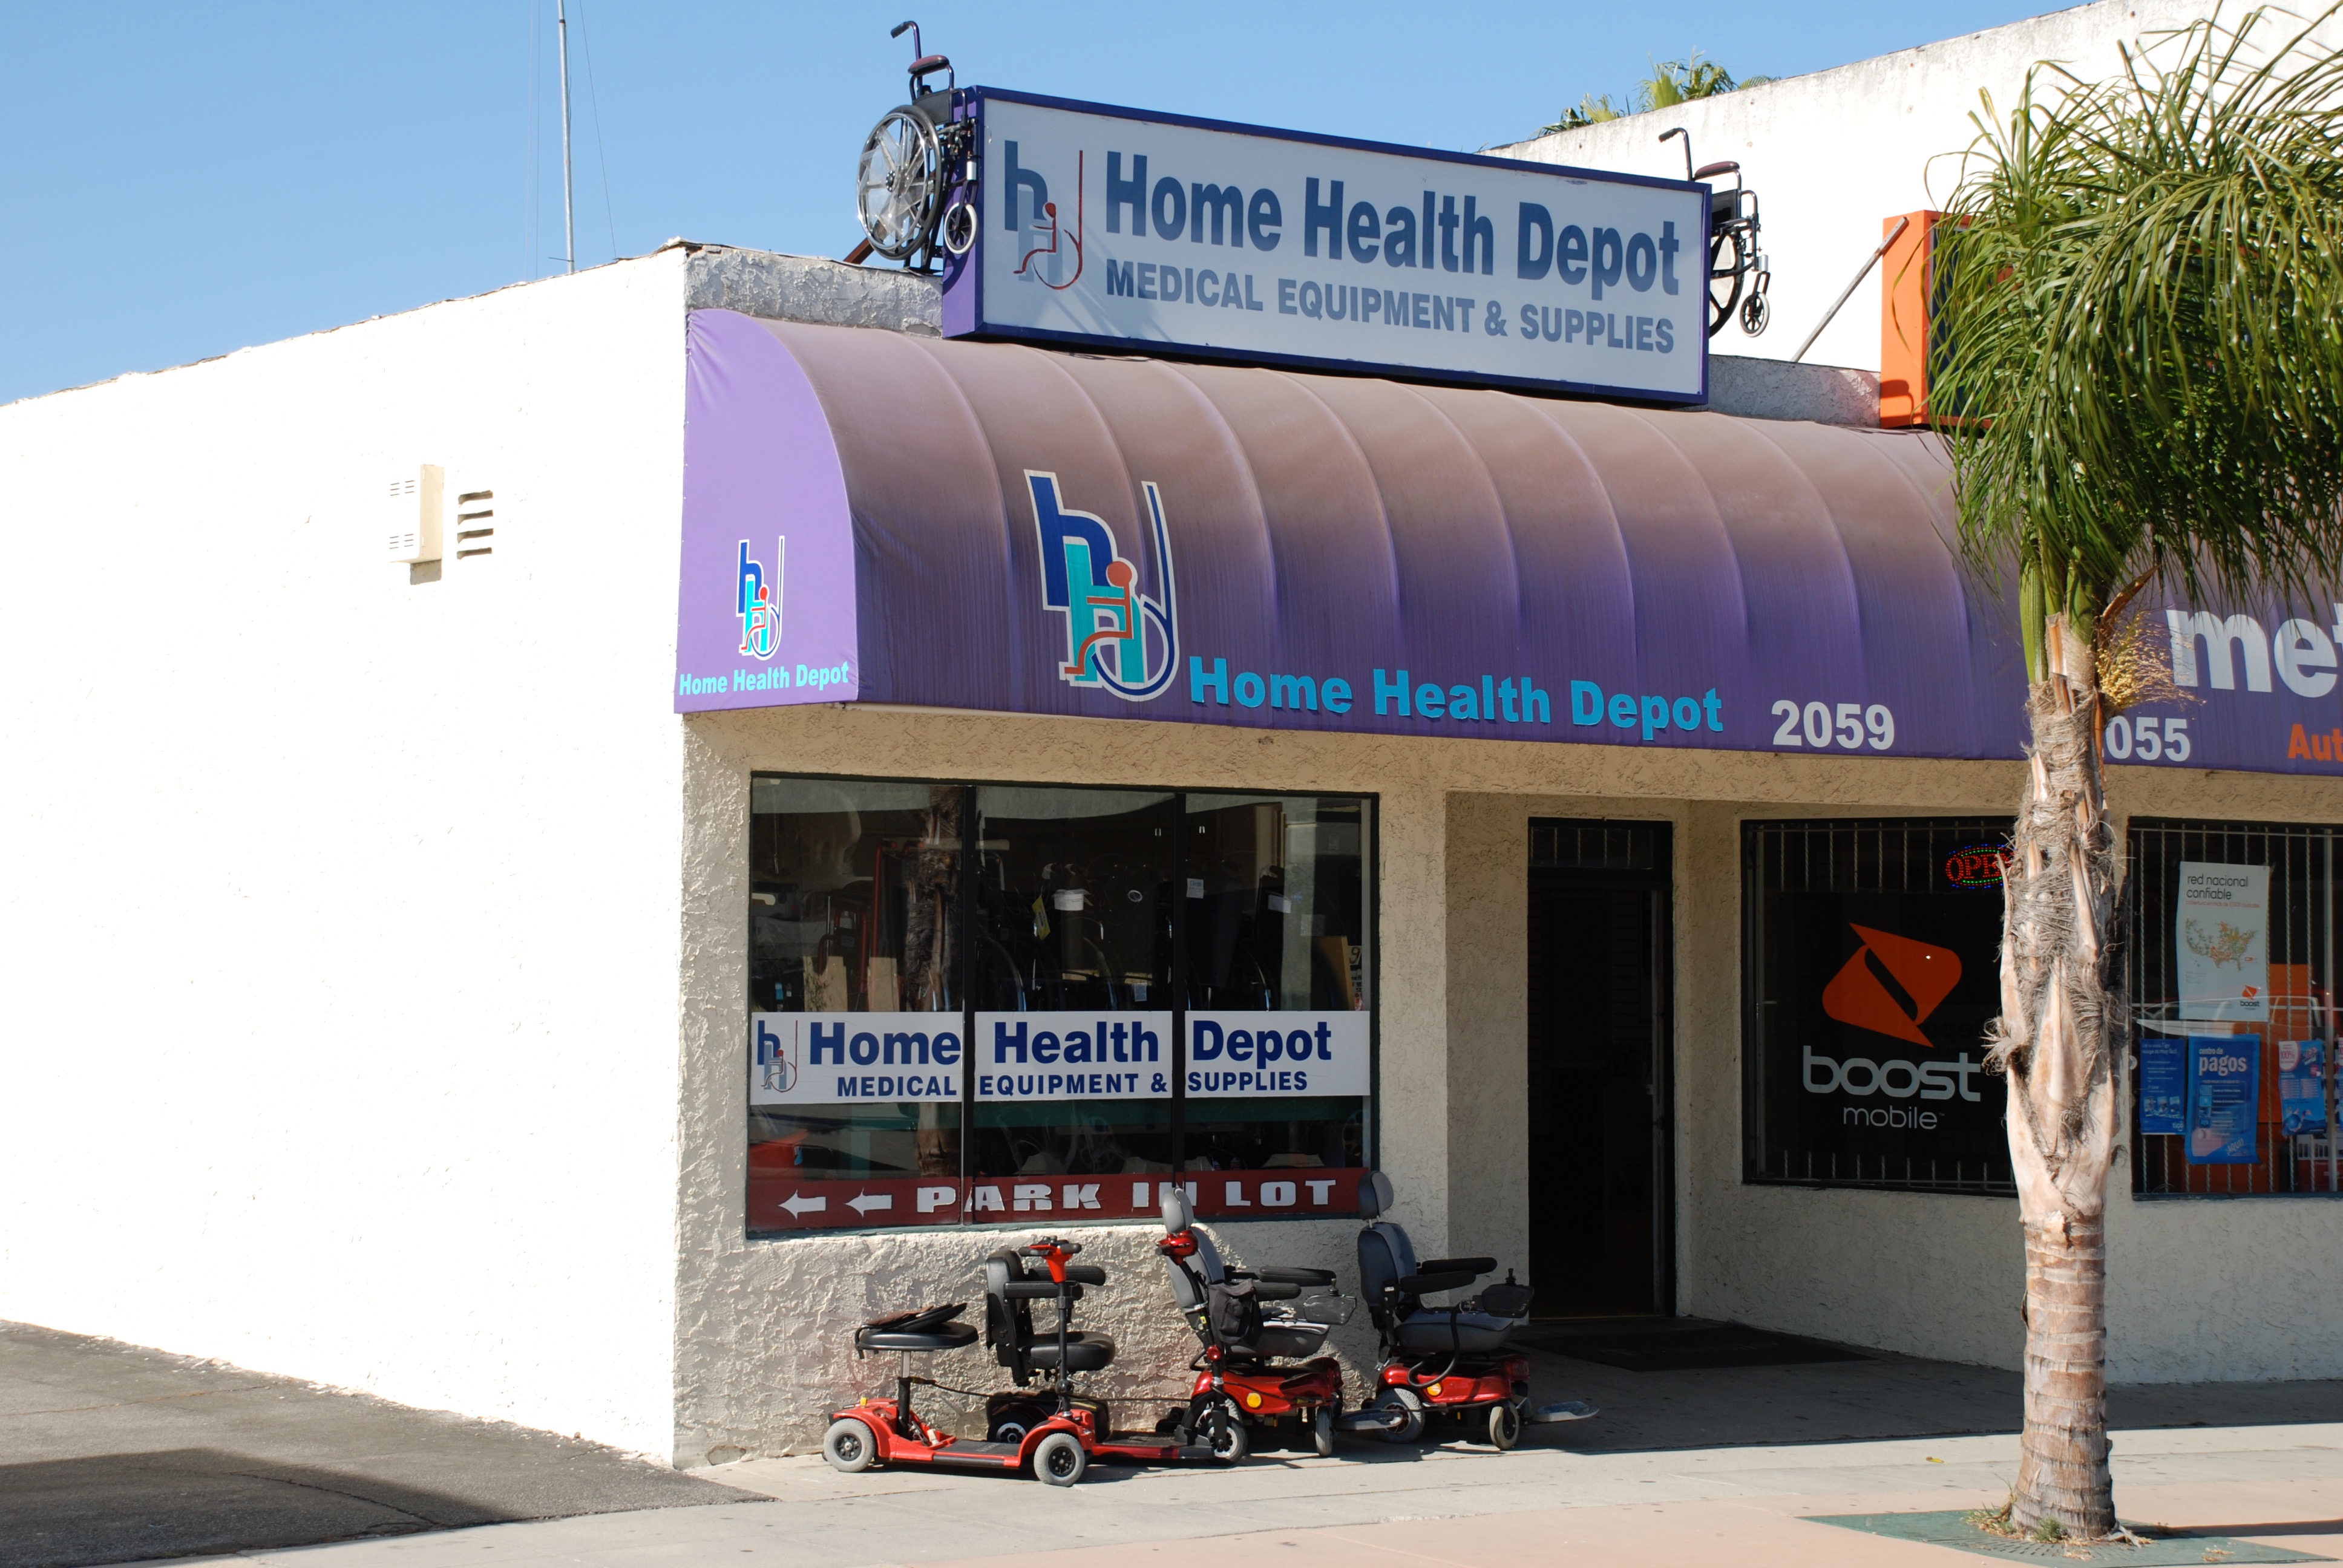 Home Health Depot Medical Equipment & Supplies | 2059 Pacific Coast Hwy, Lomita, CA, 90717 | +1 (310) 891-1954